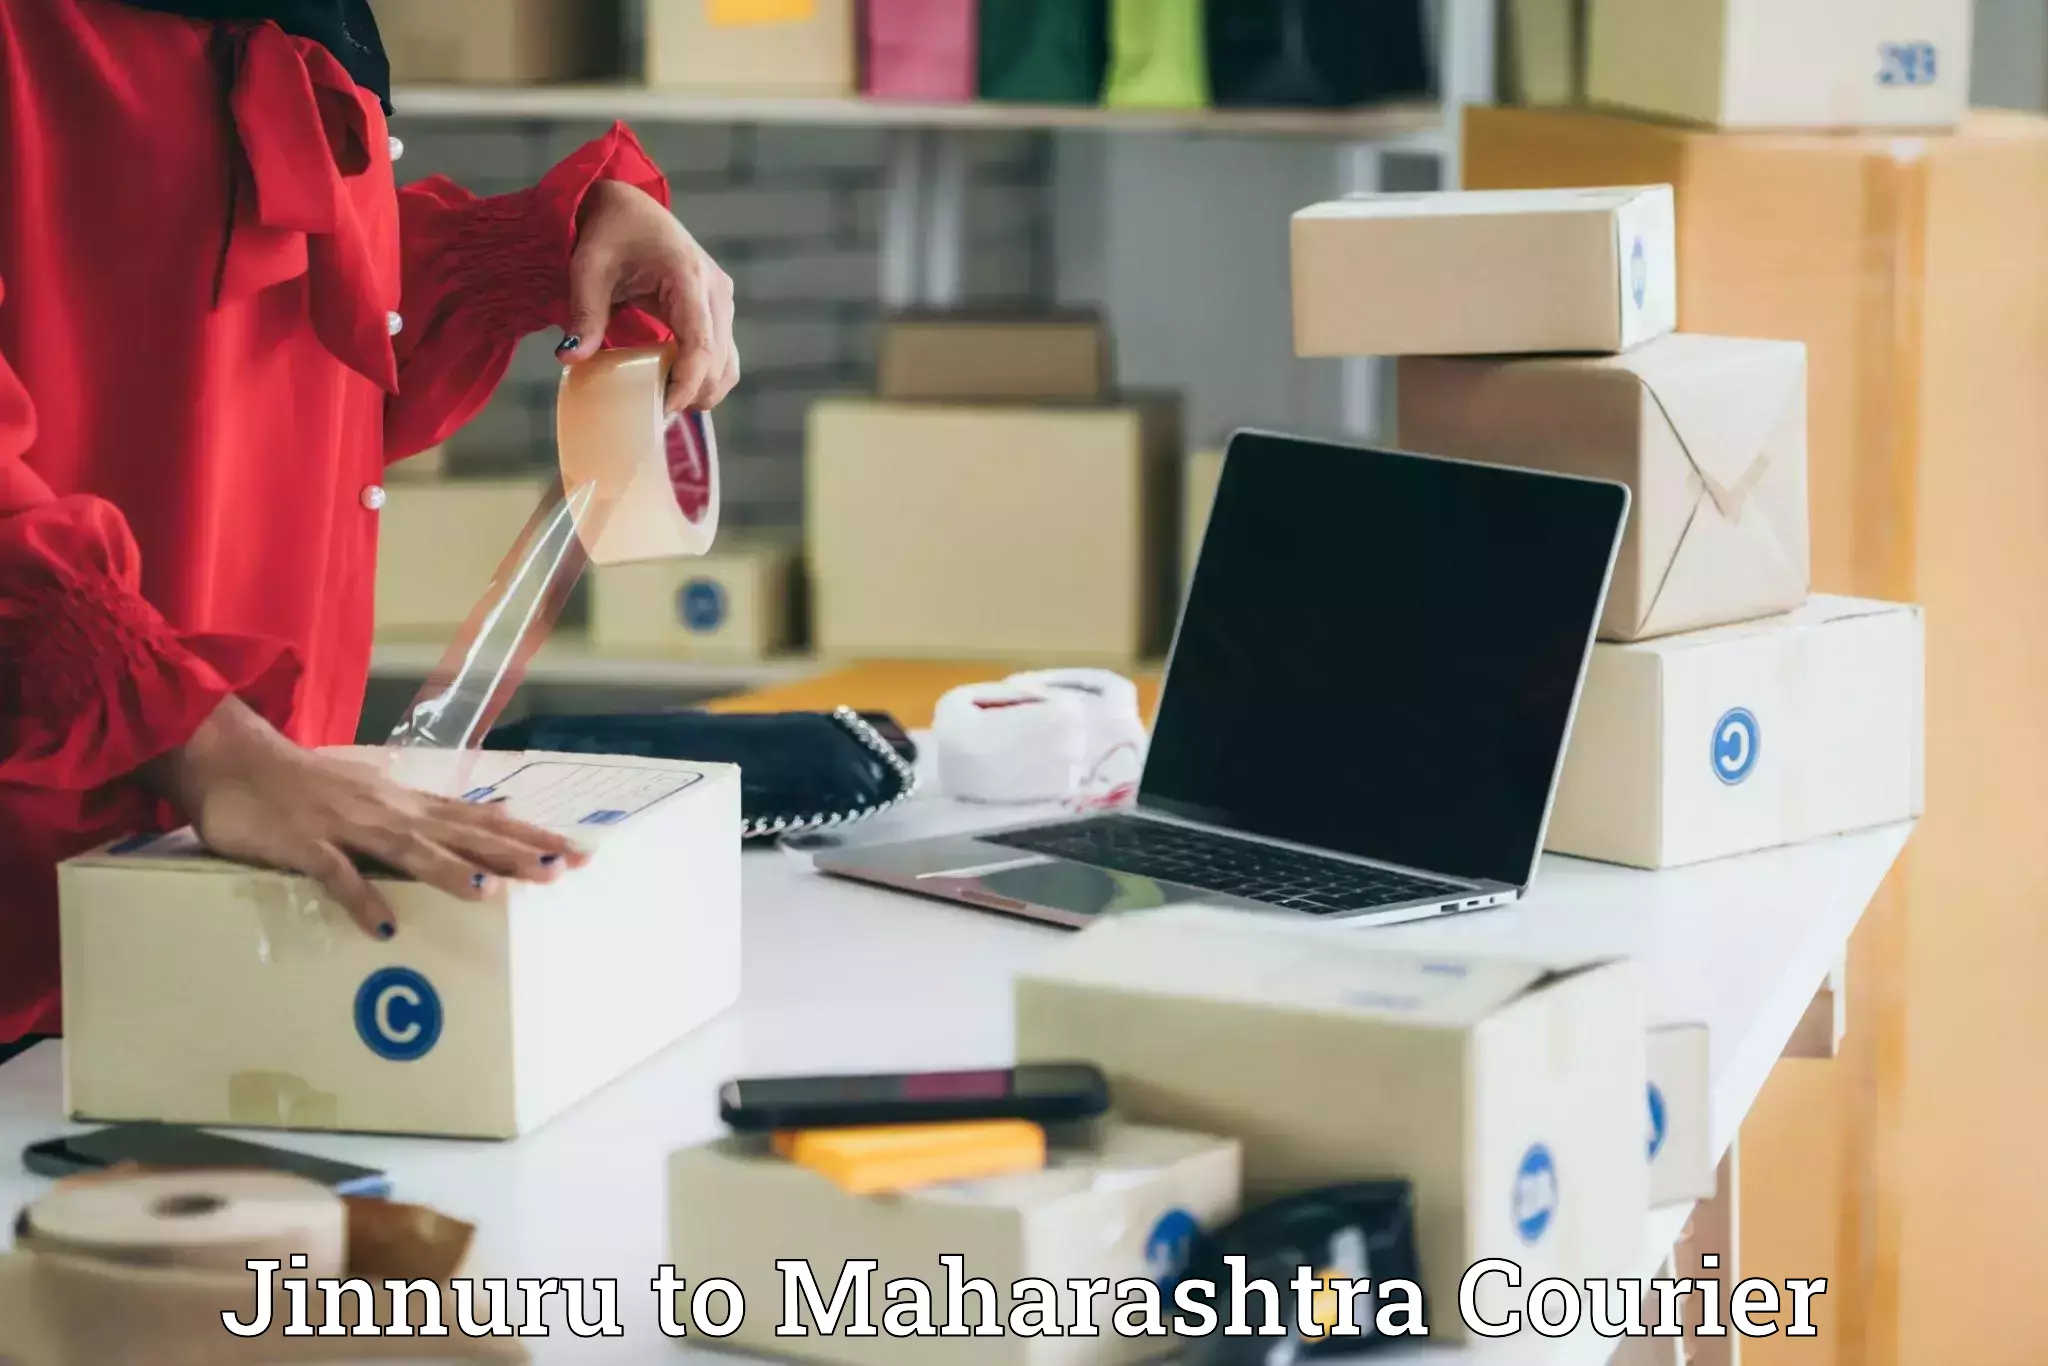 Quality courier partnerships Jinnuru to Maharashtra